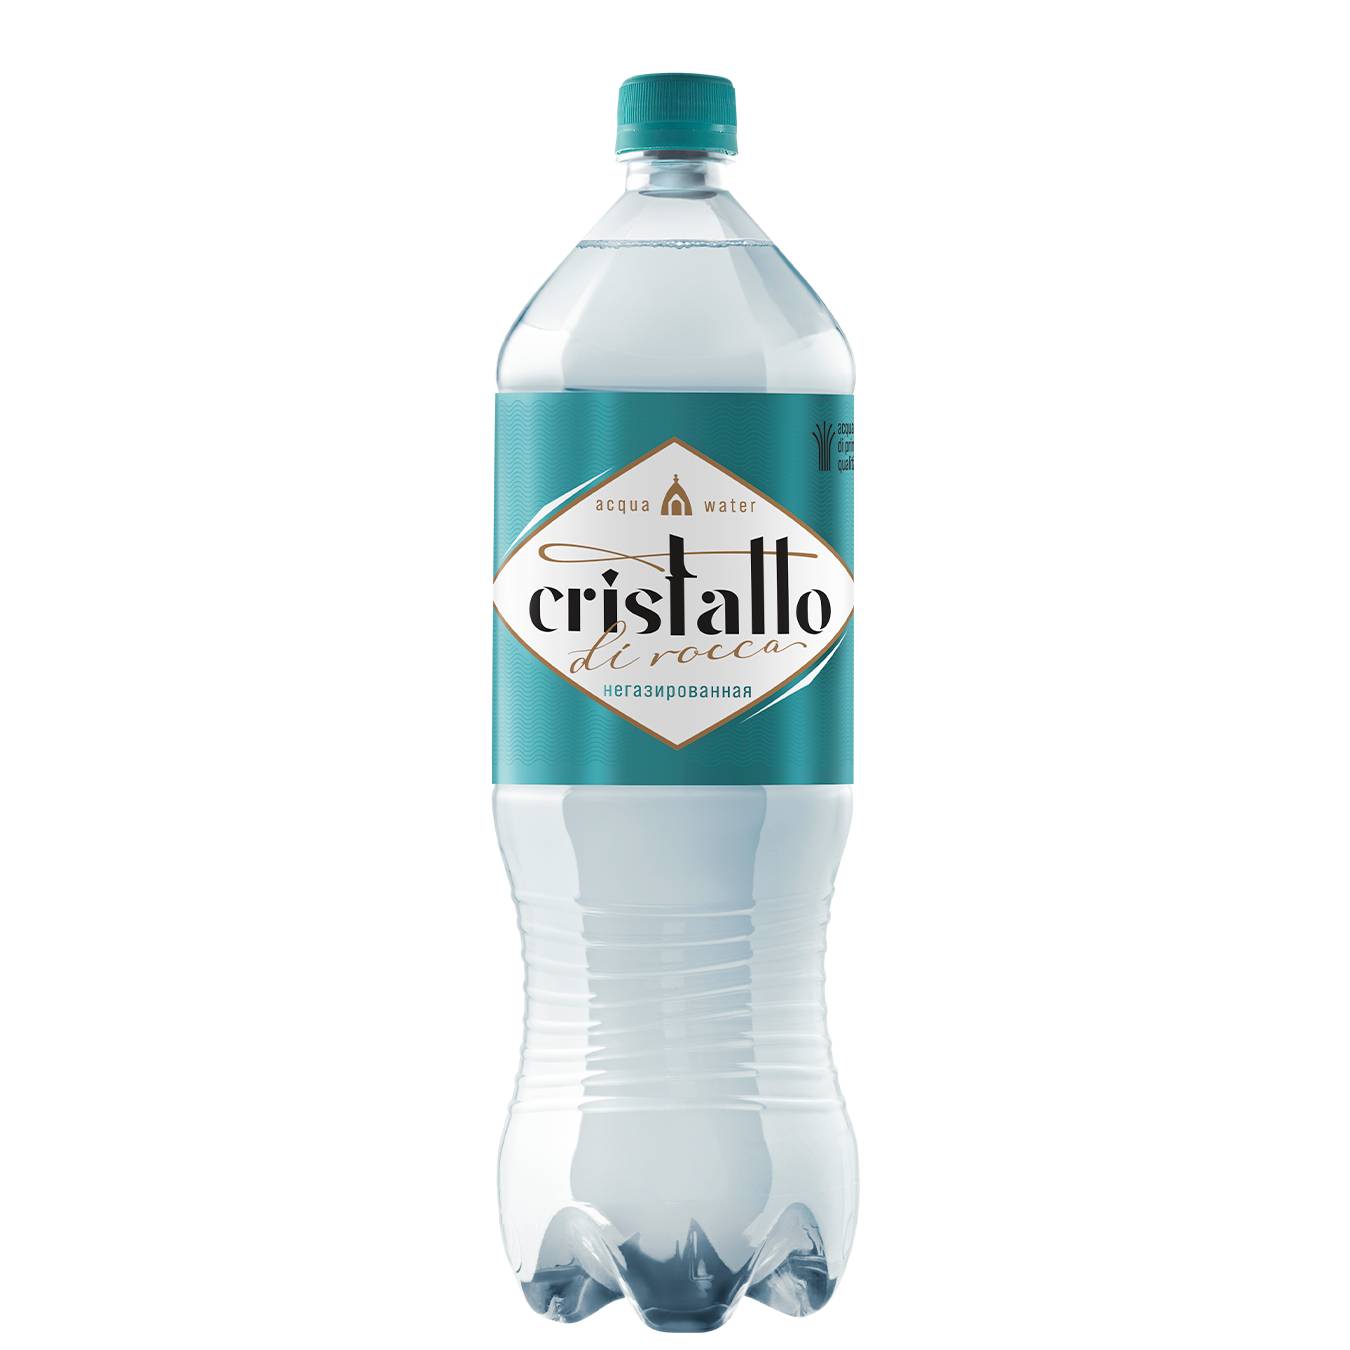 Вода Очаково Cristallo di rocco негазированная 1,5 л